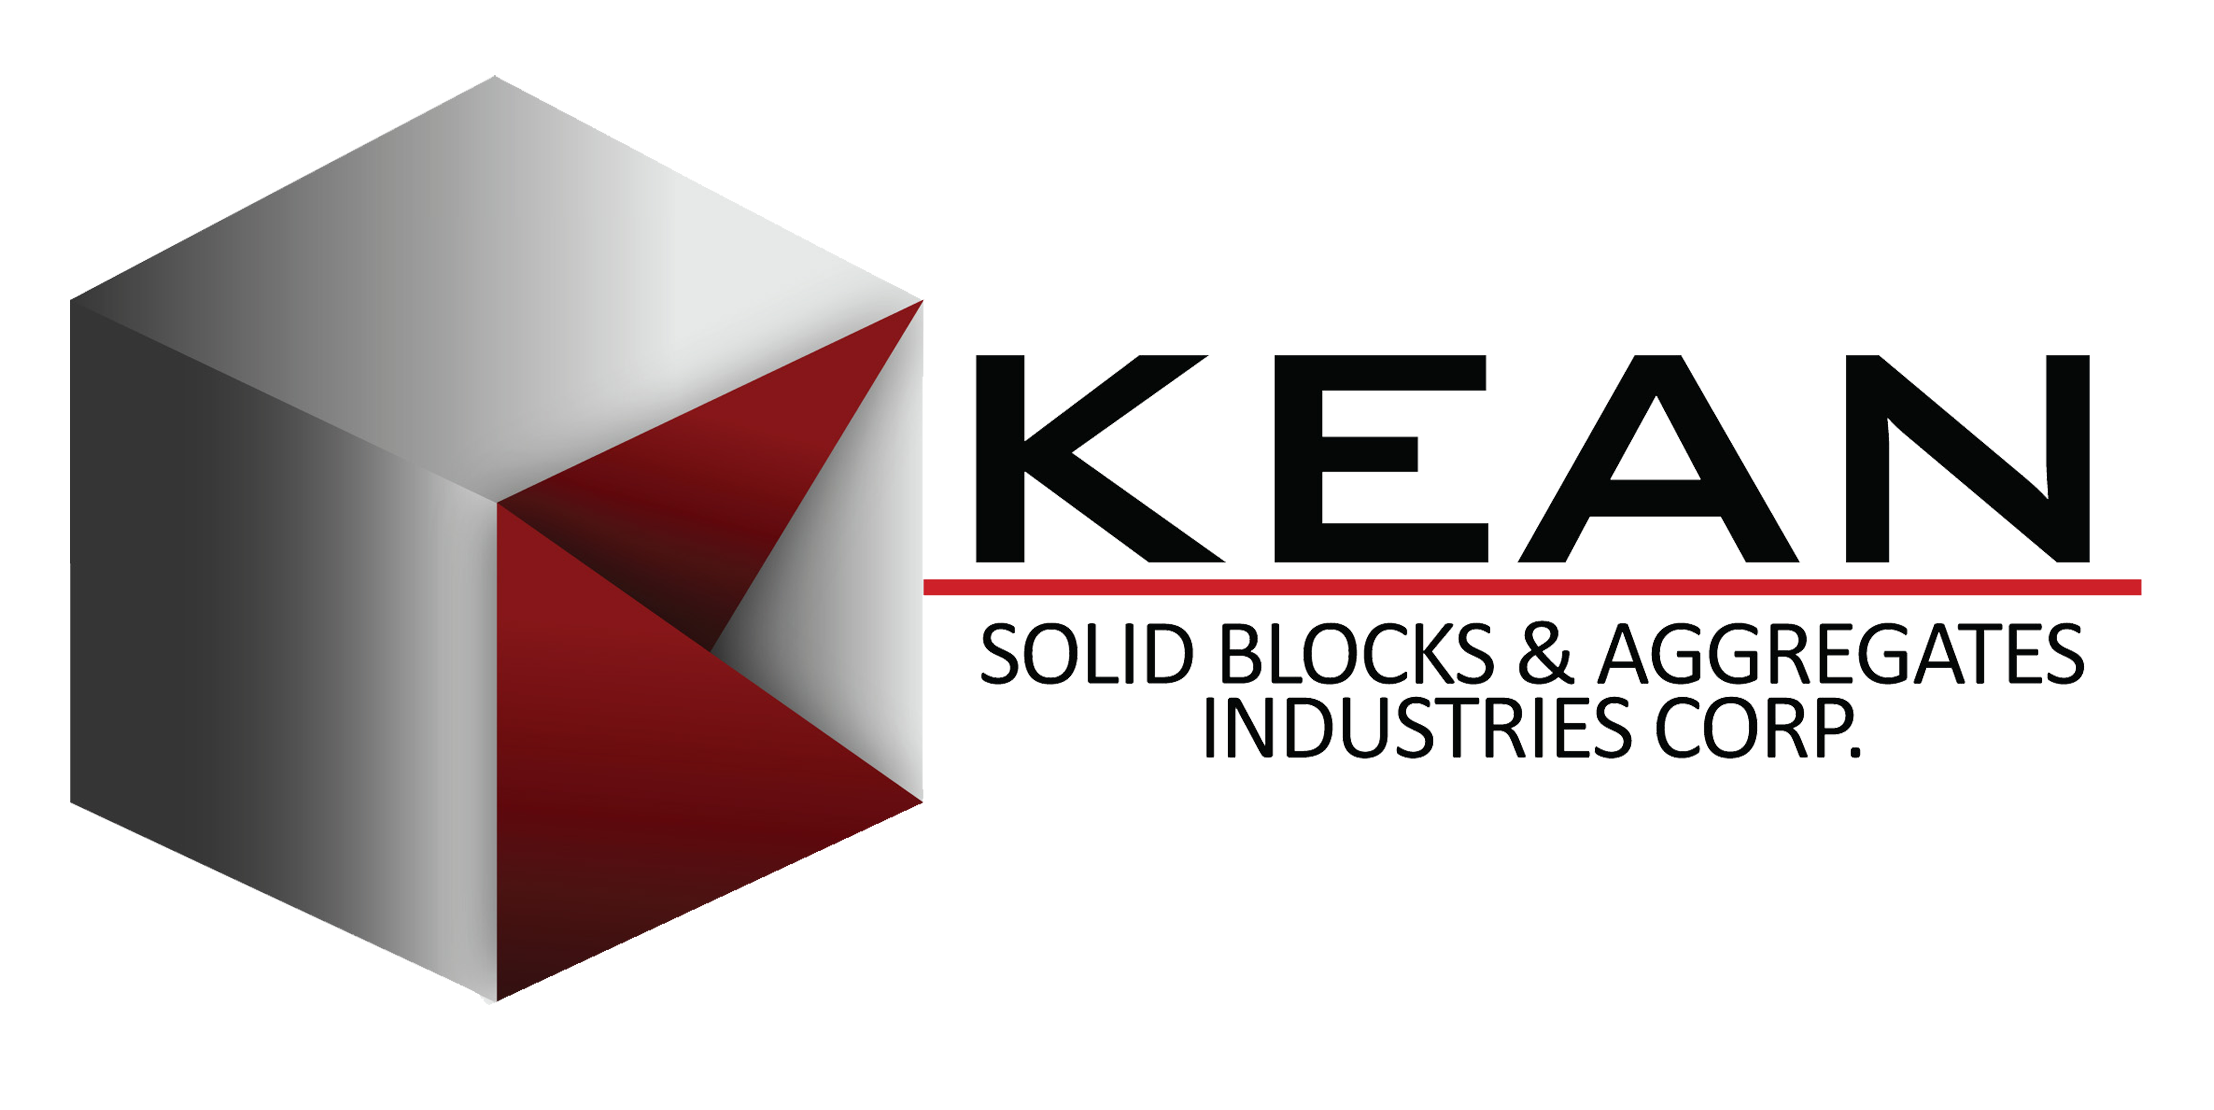 Kean Solid Blocks & Aggregates Industries Corp.